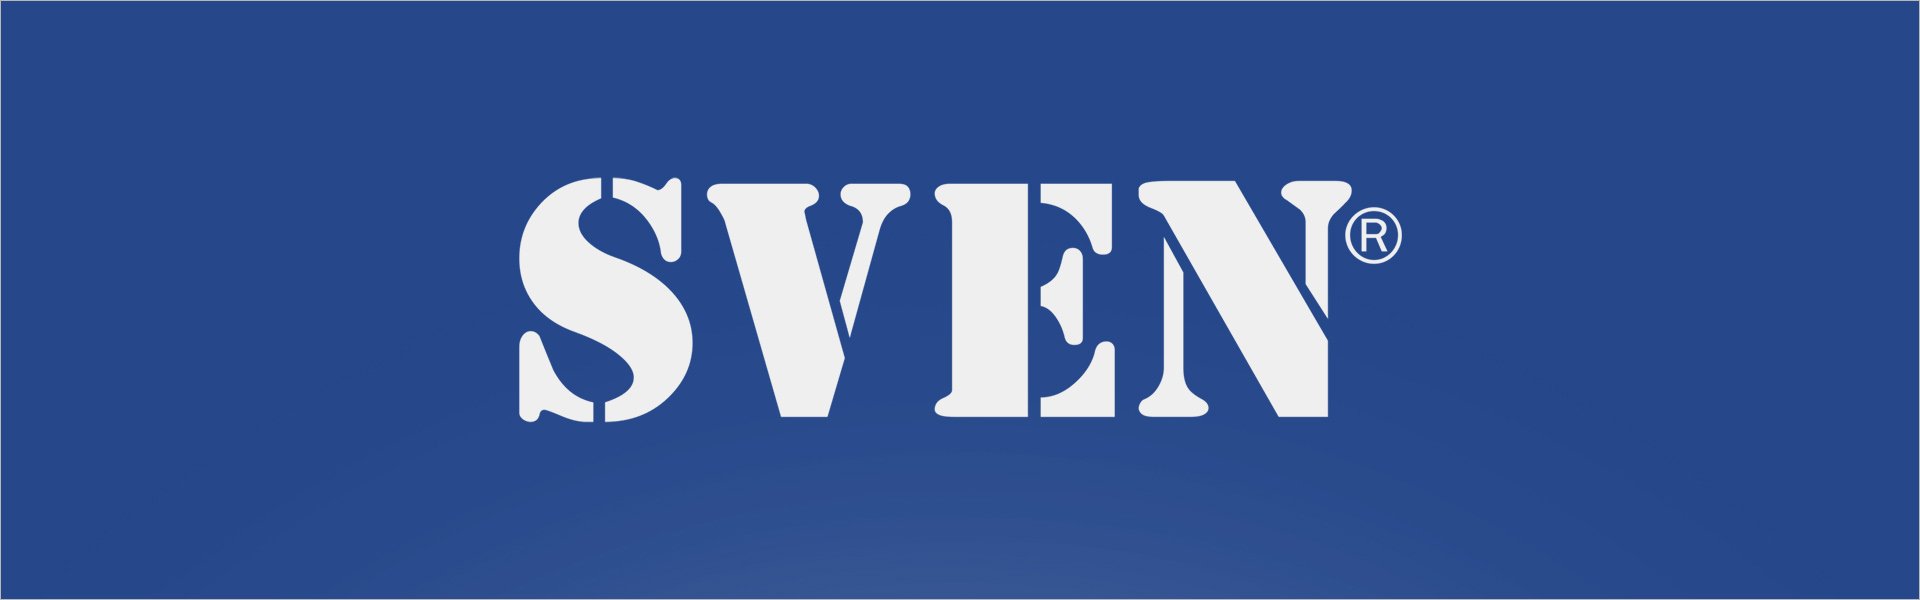 Sven PS-720 Sven